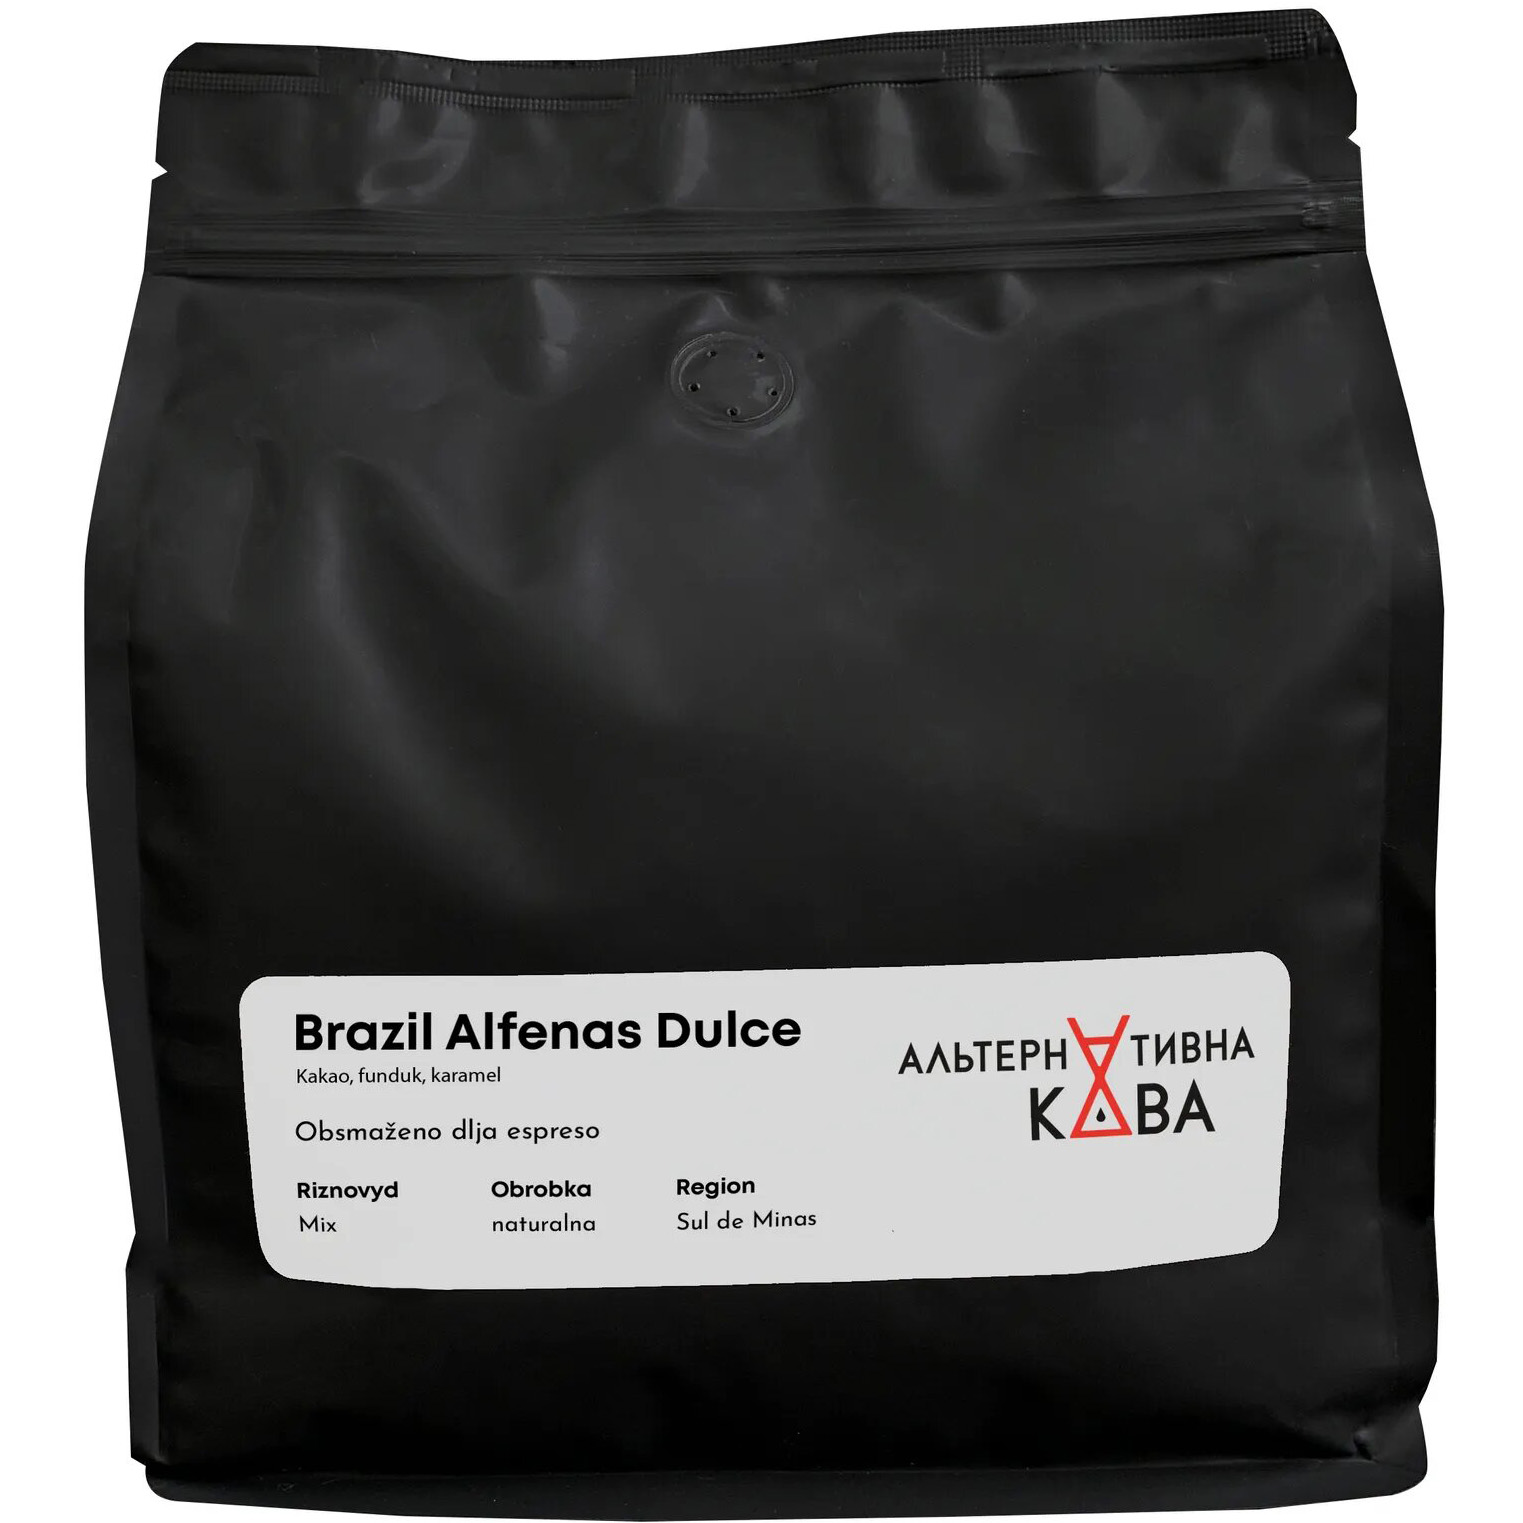 Кава в зернах Альтернативна Кава Brazil Alfenac Dulce арабіка 1 кг - фото 1